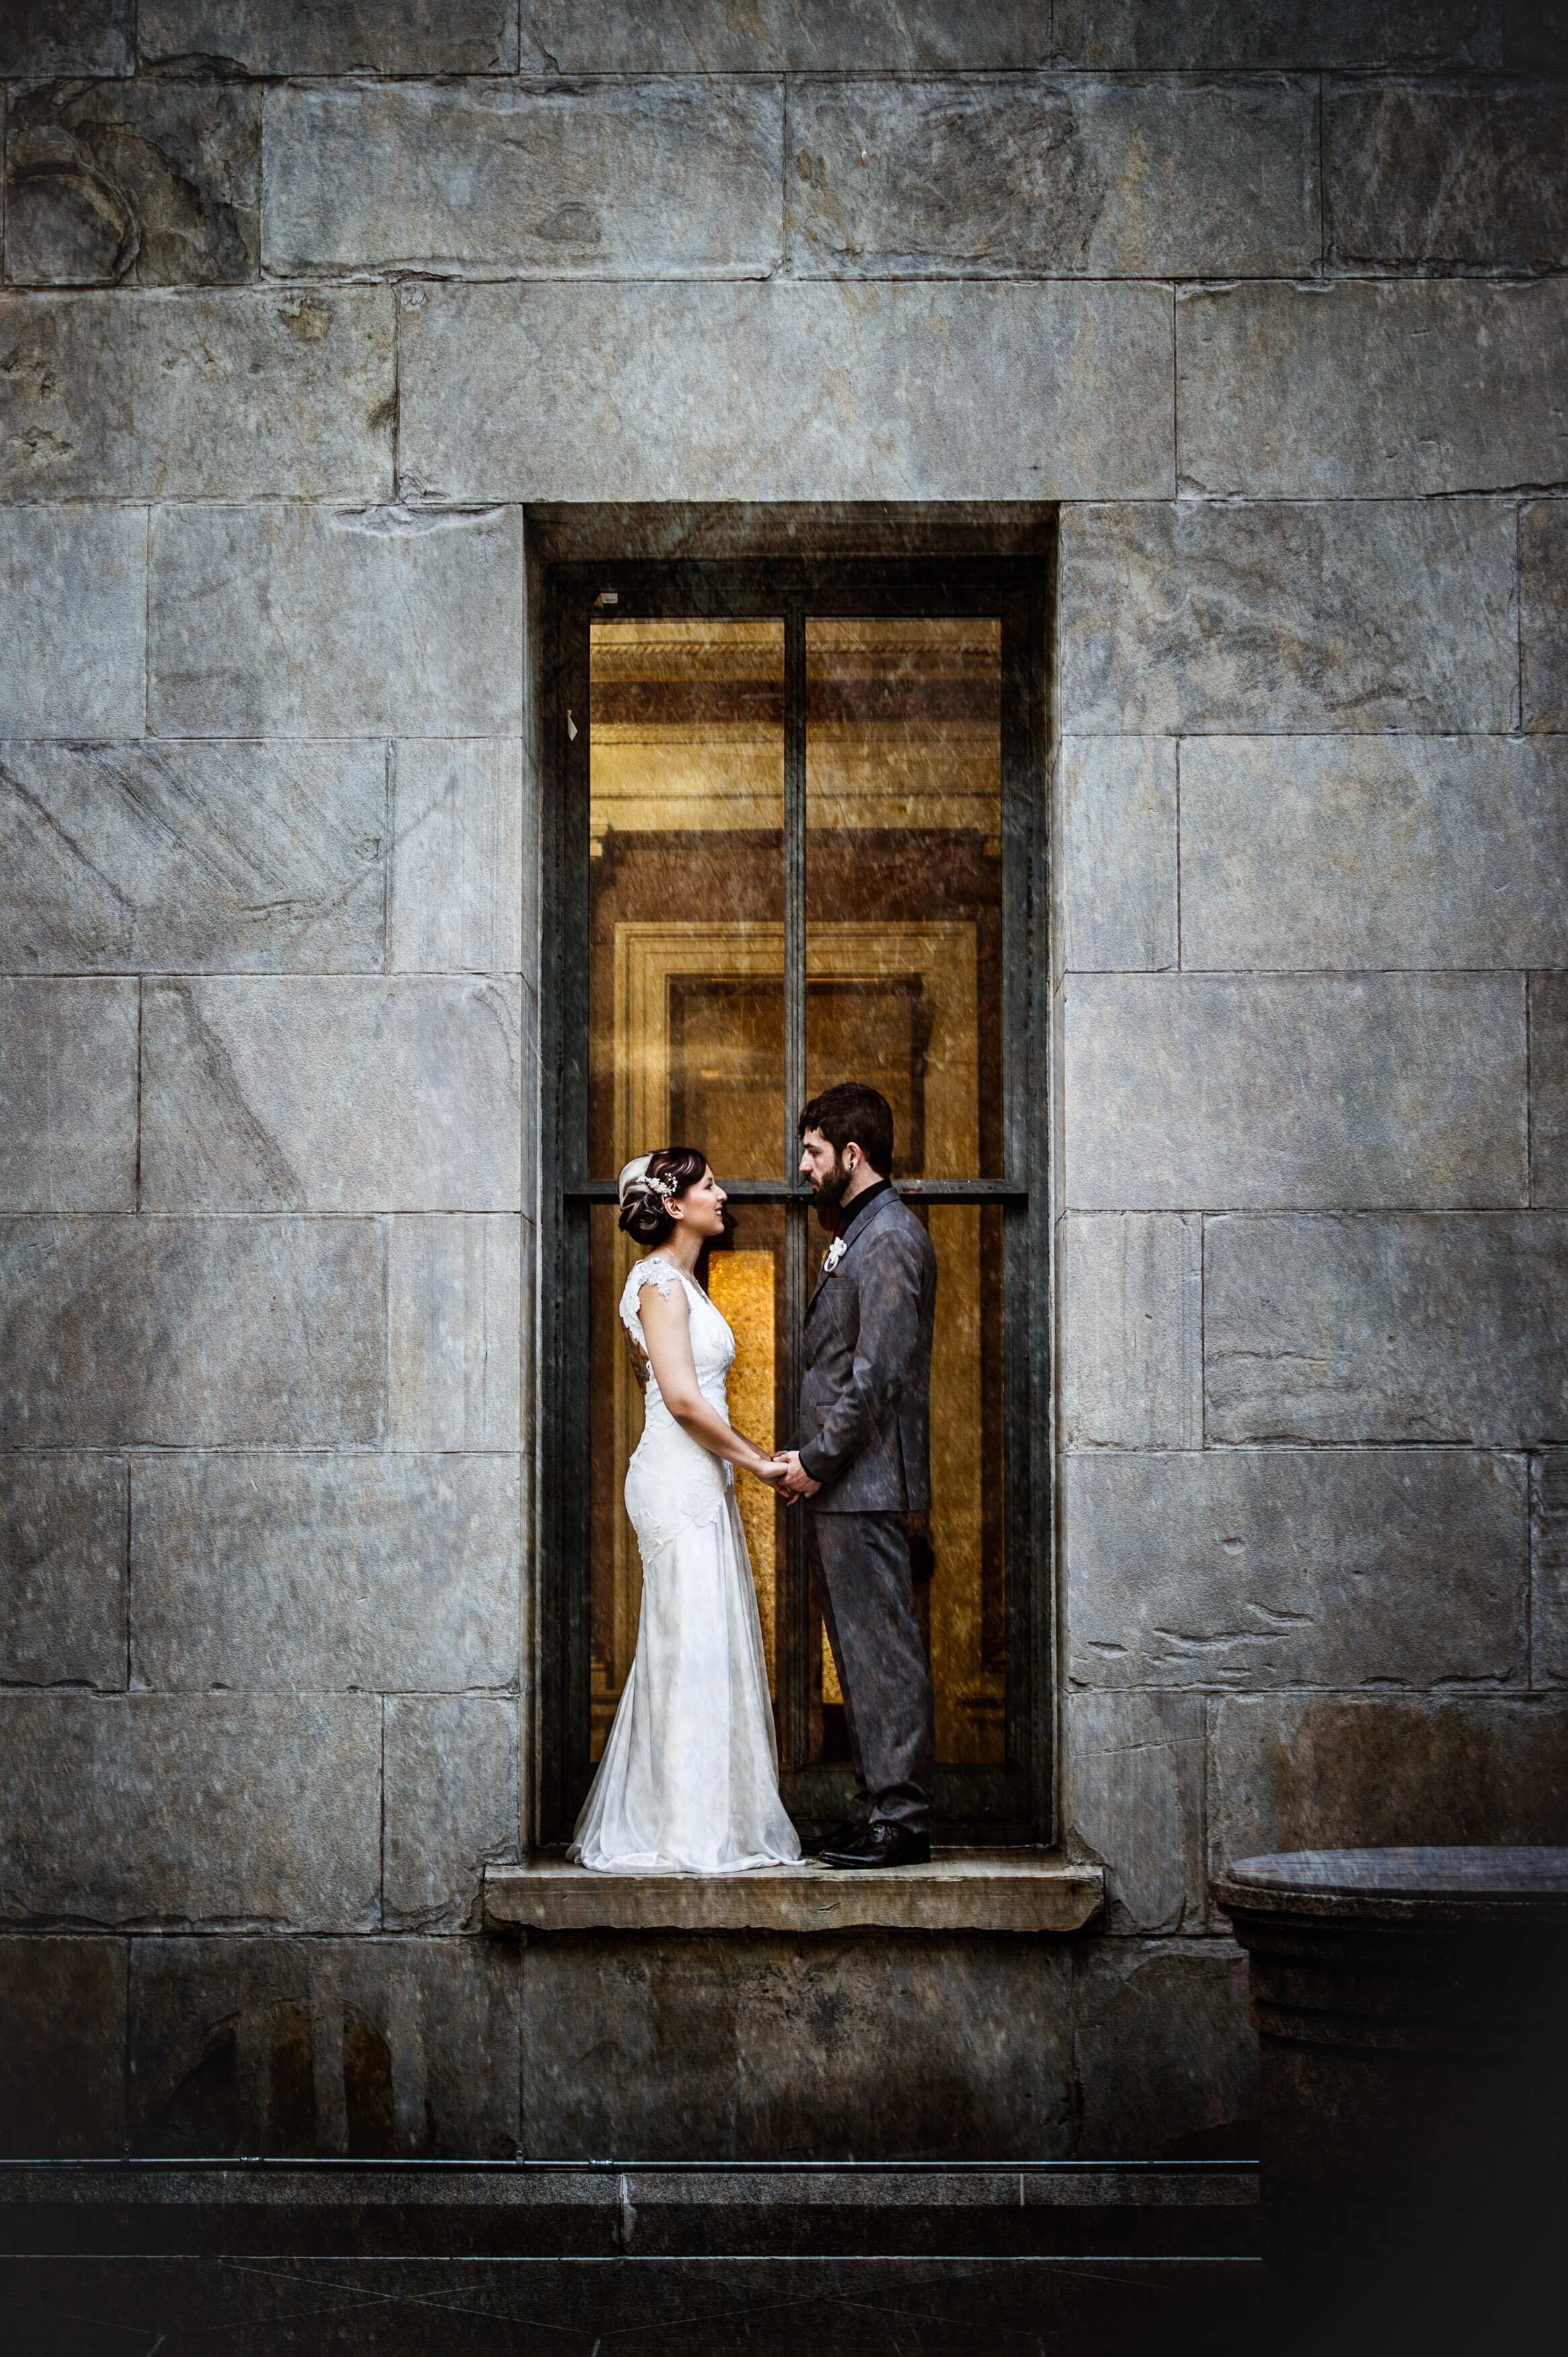 wedding-bride-groom-window-elegant-